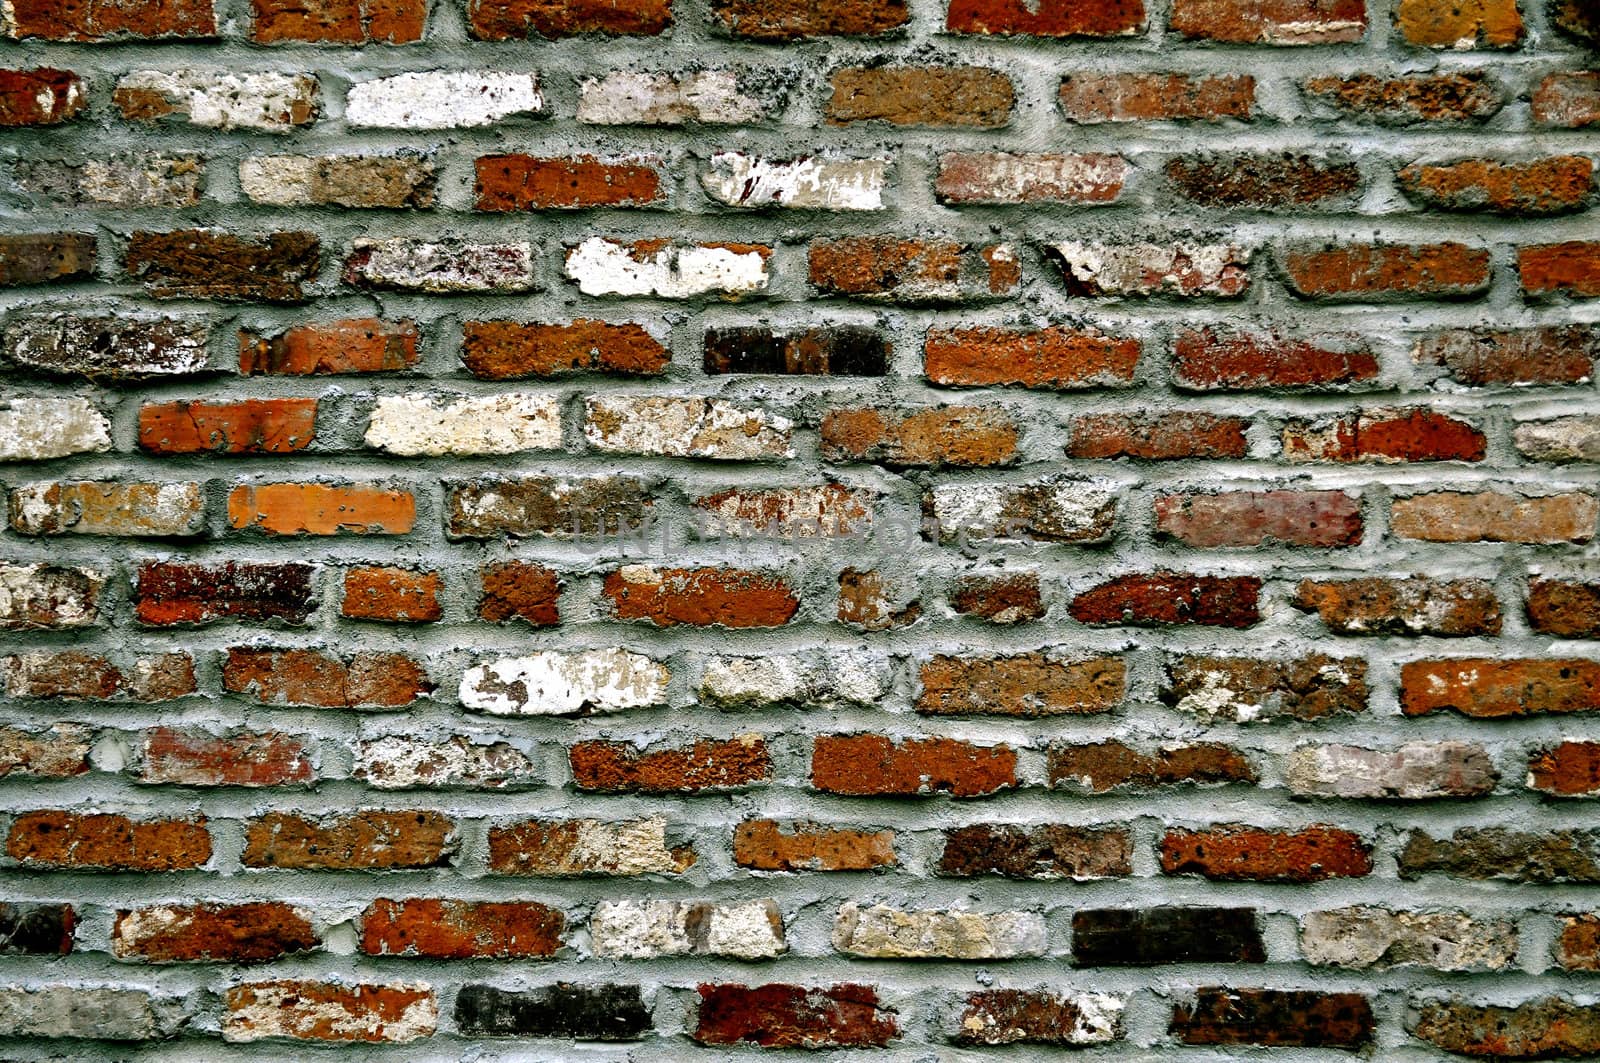 Brick Wall by RefocusPhoto